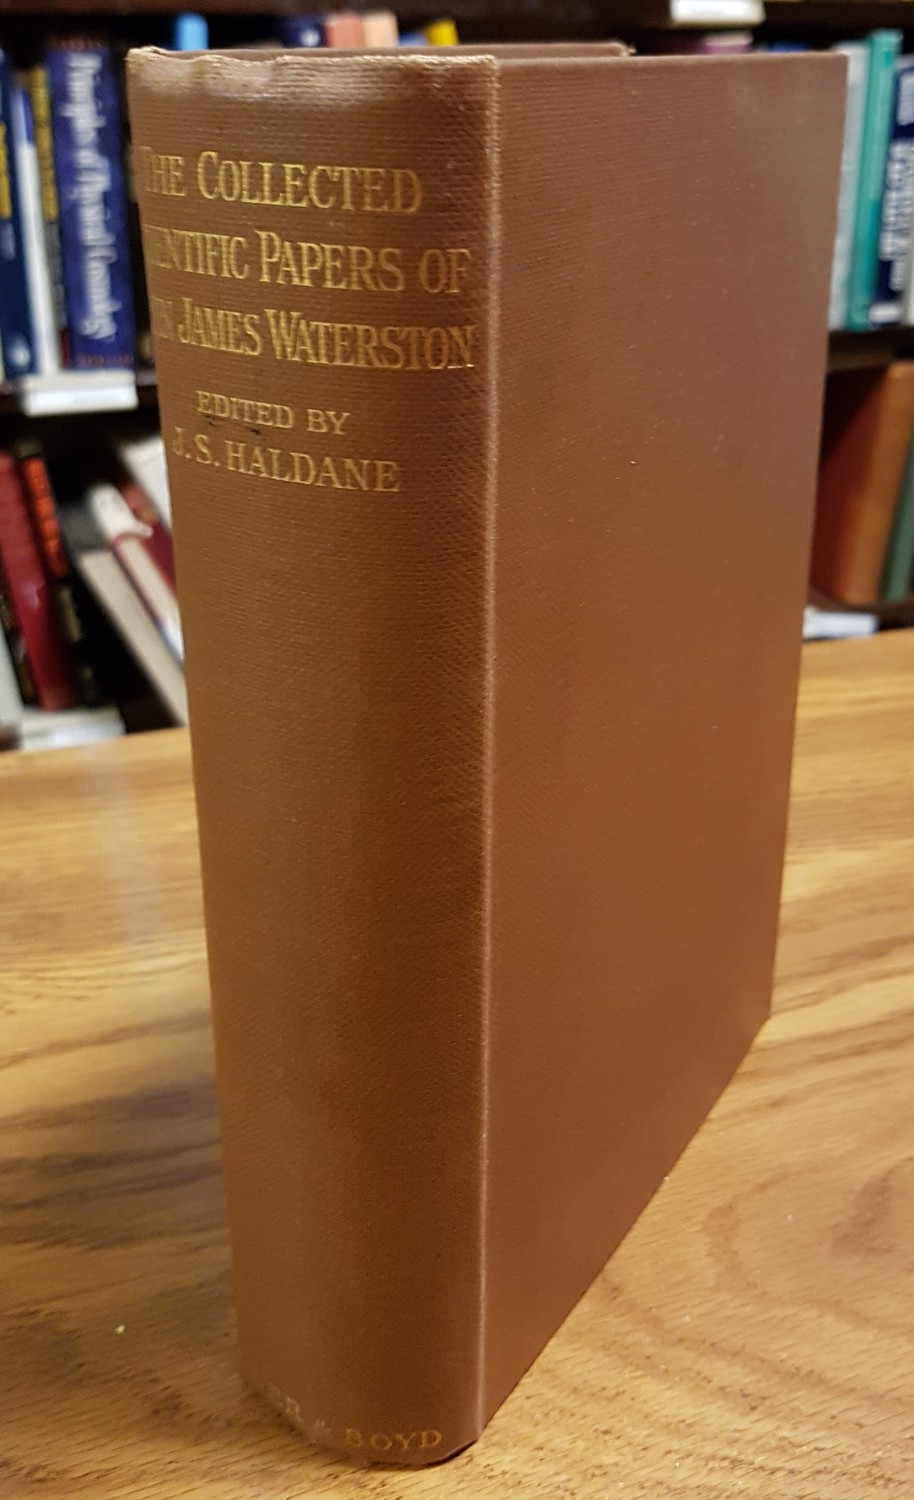 HALDANE, J. S. (EDITOR) & JOHN JAMES WATERSTON - The Collected Scientific Papers of John James Waterston